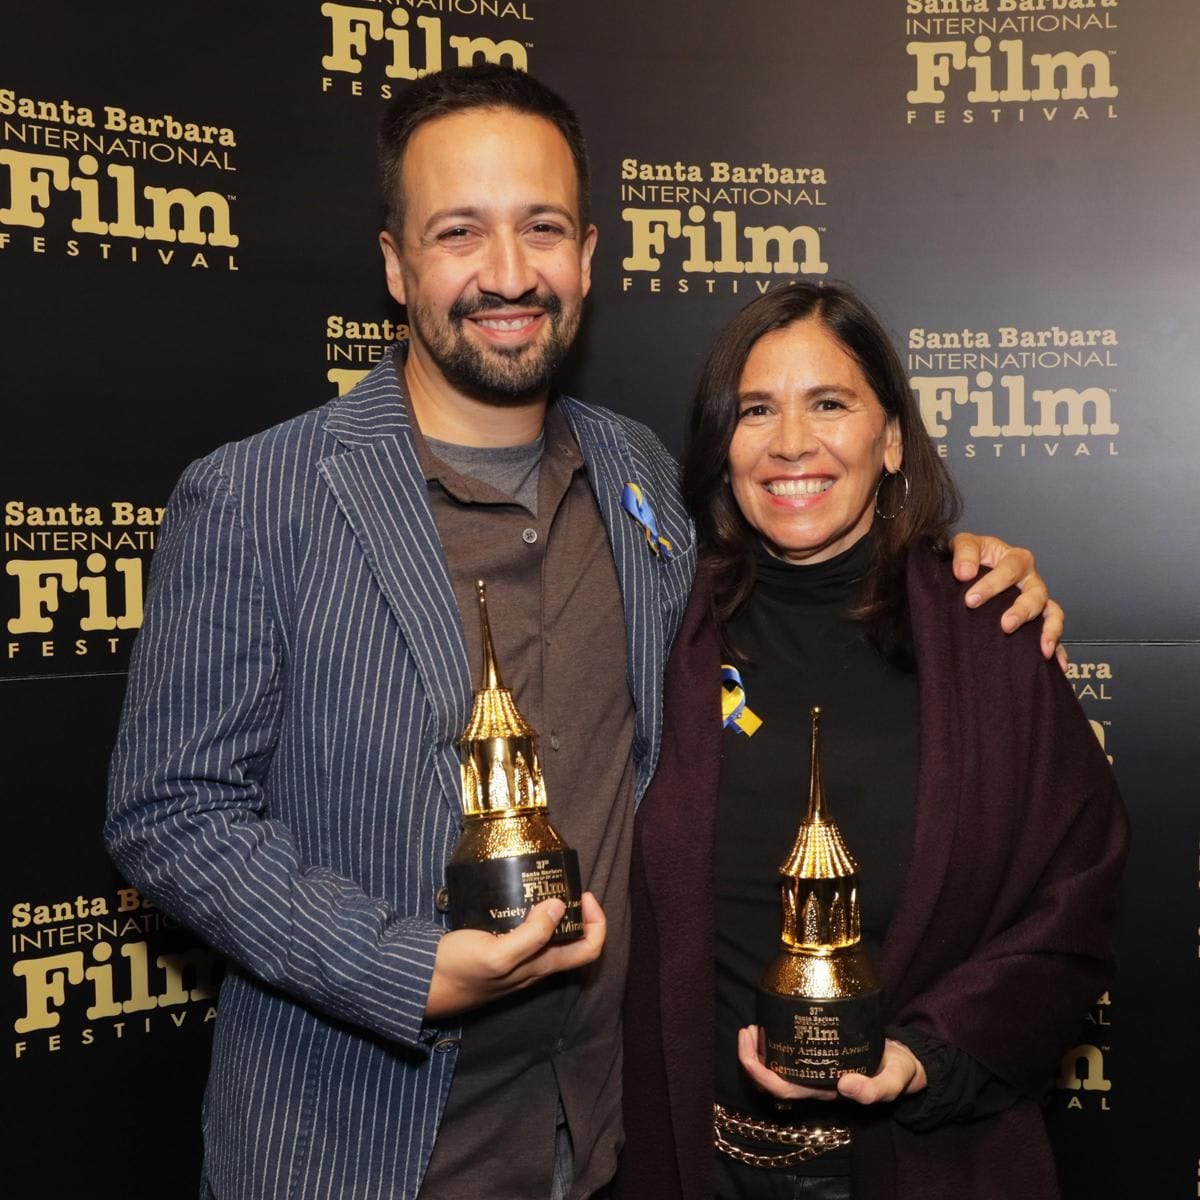 37th Annual Santa Barbara International Film Festival   Variety Artisans Award